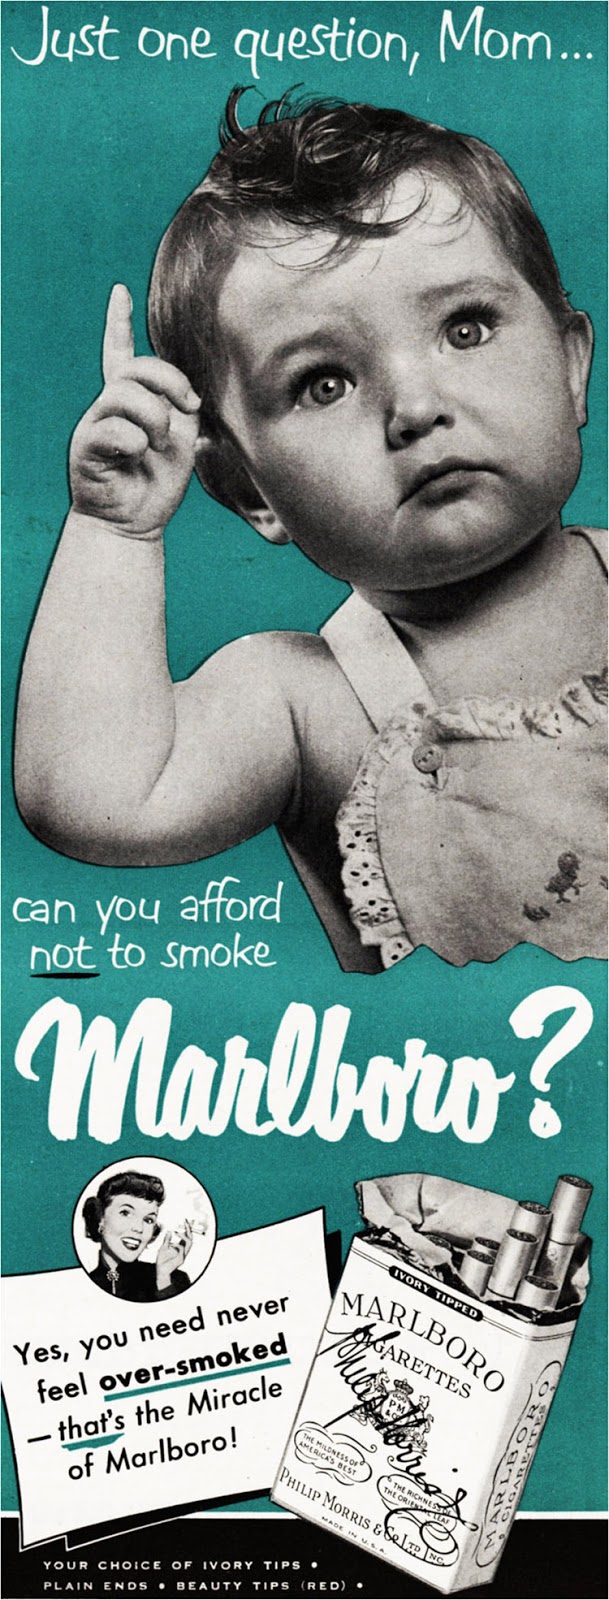 Propaganda de cigarro (Marboro) nos anos 50 fazendo uso de bebê.